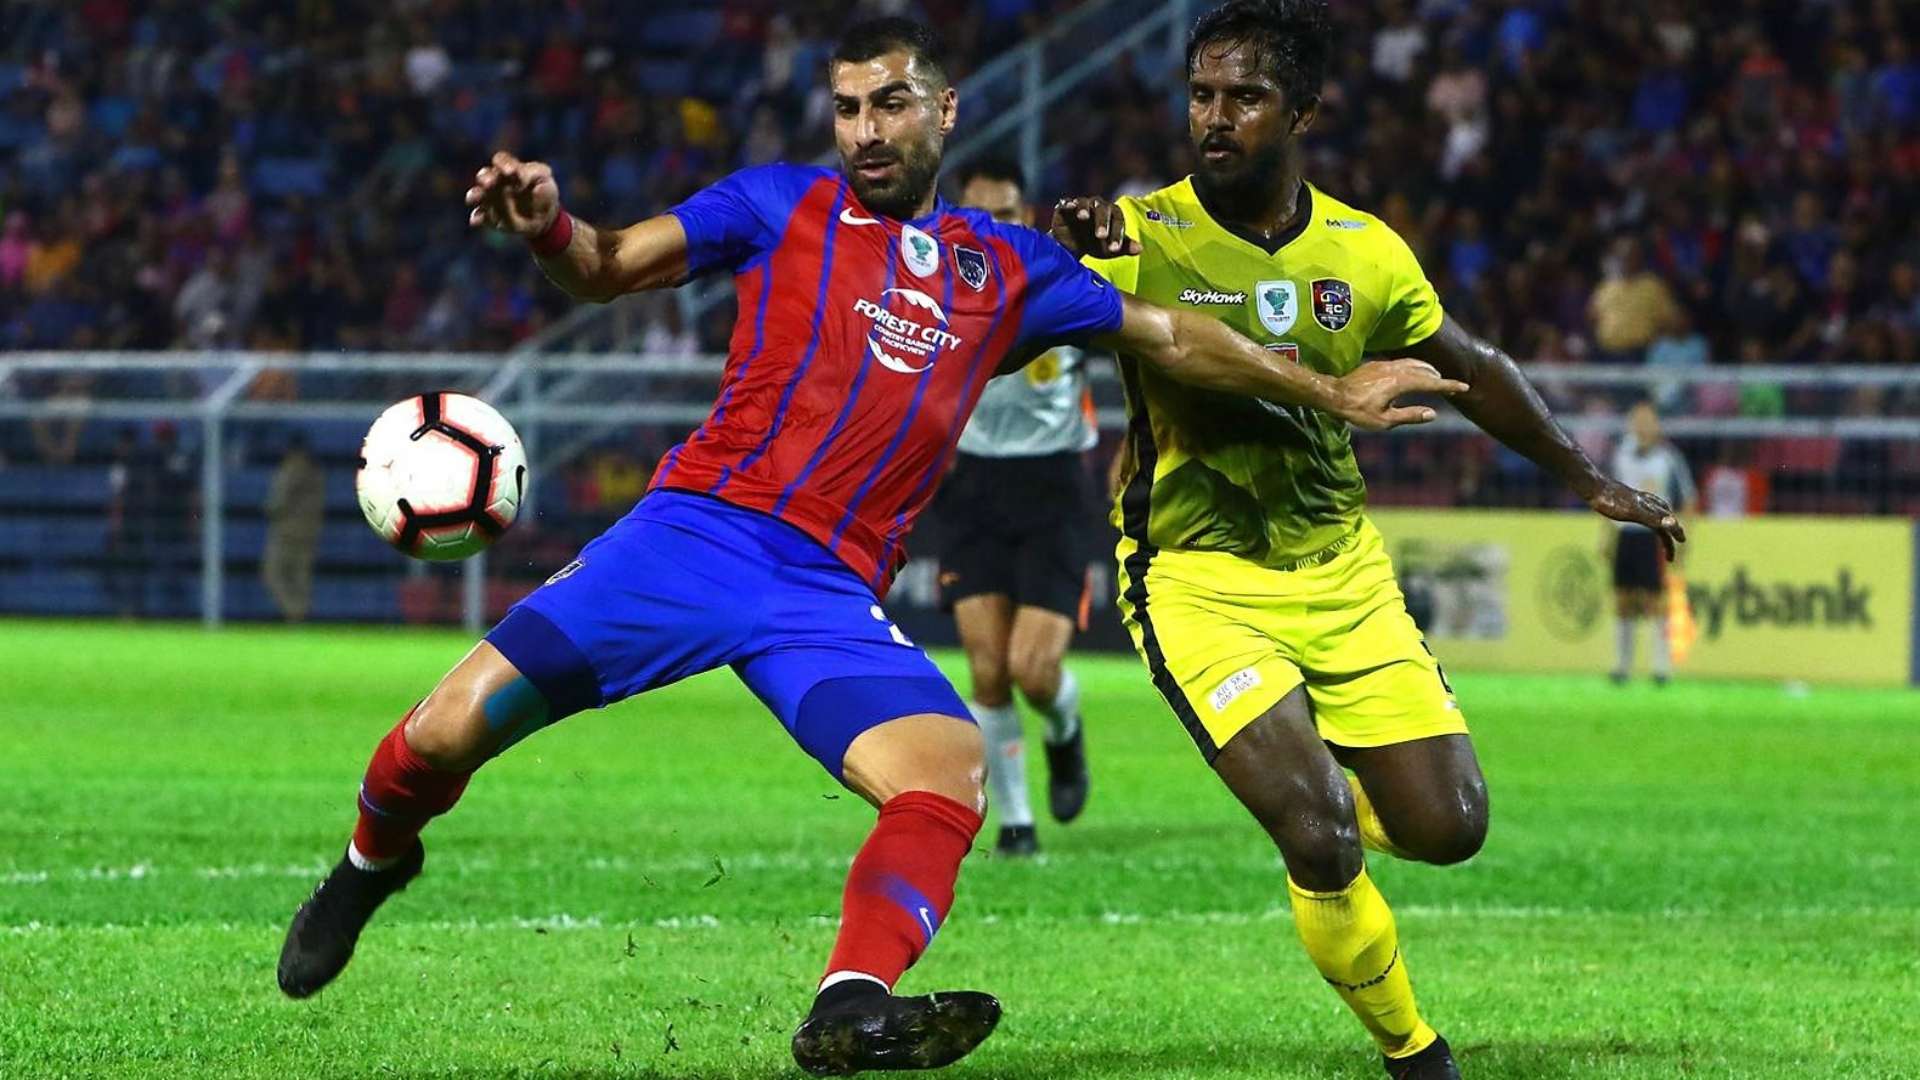 Mohamed Ghaddar, Johor Darul Ta'zim II v UKM FC, Challenge Cup, 4 Oct 2019